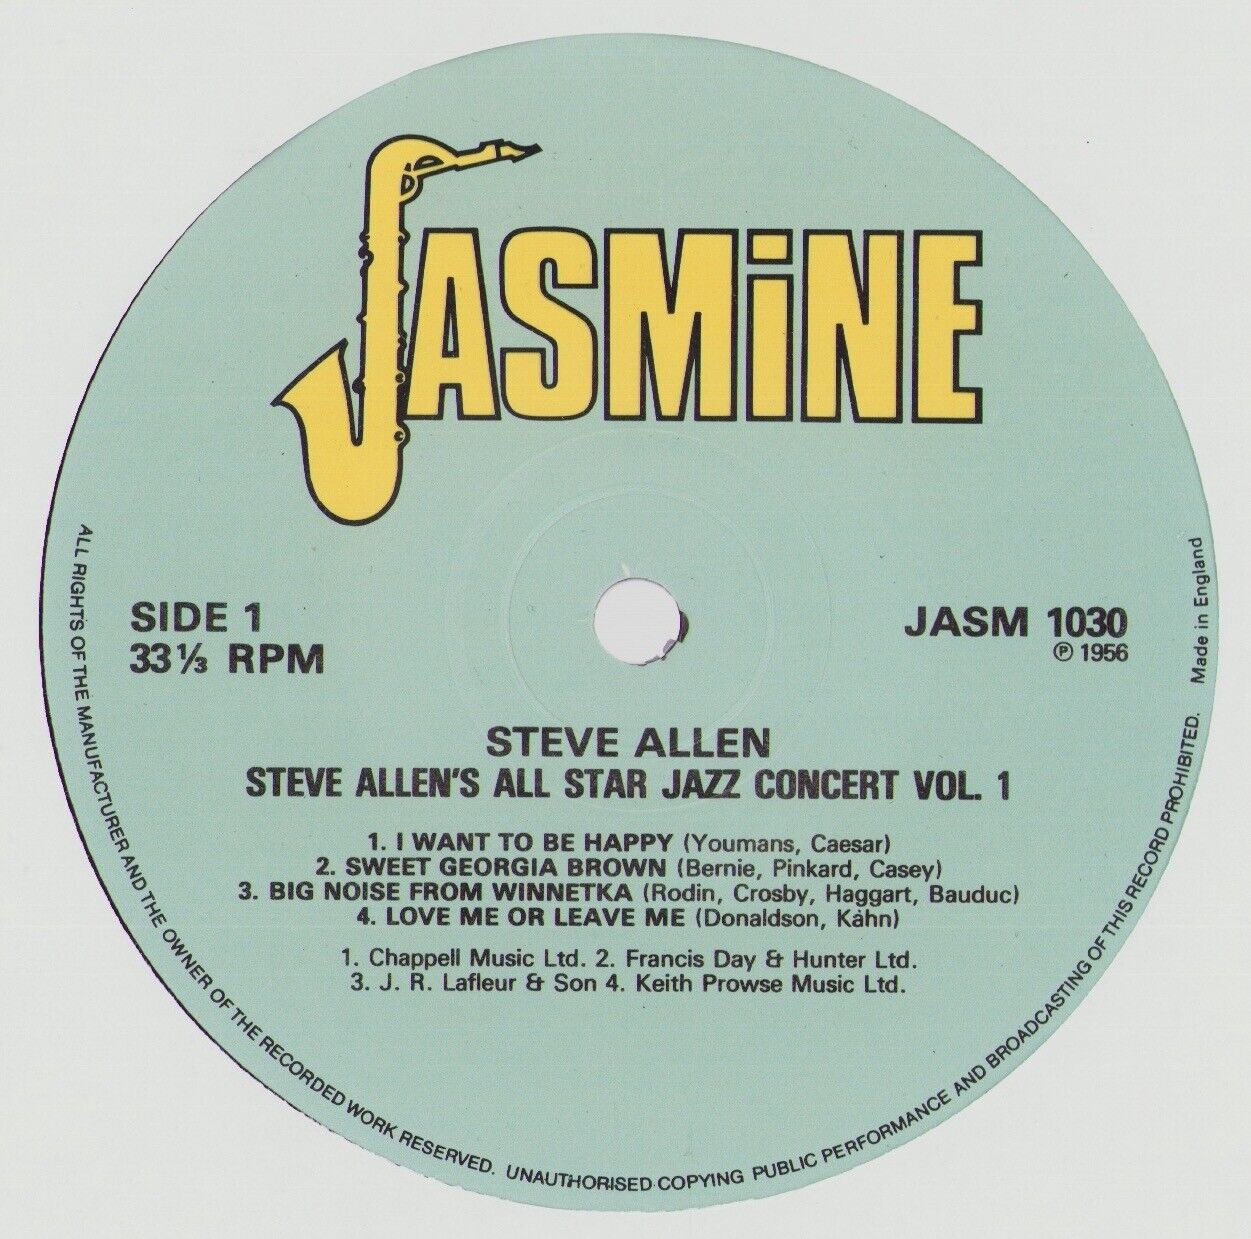 Steve Allen - Steve Allen's All Star Jazz Concert Vol. 1 Vinyl LP